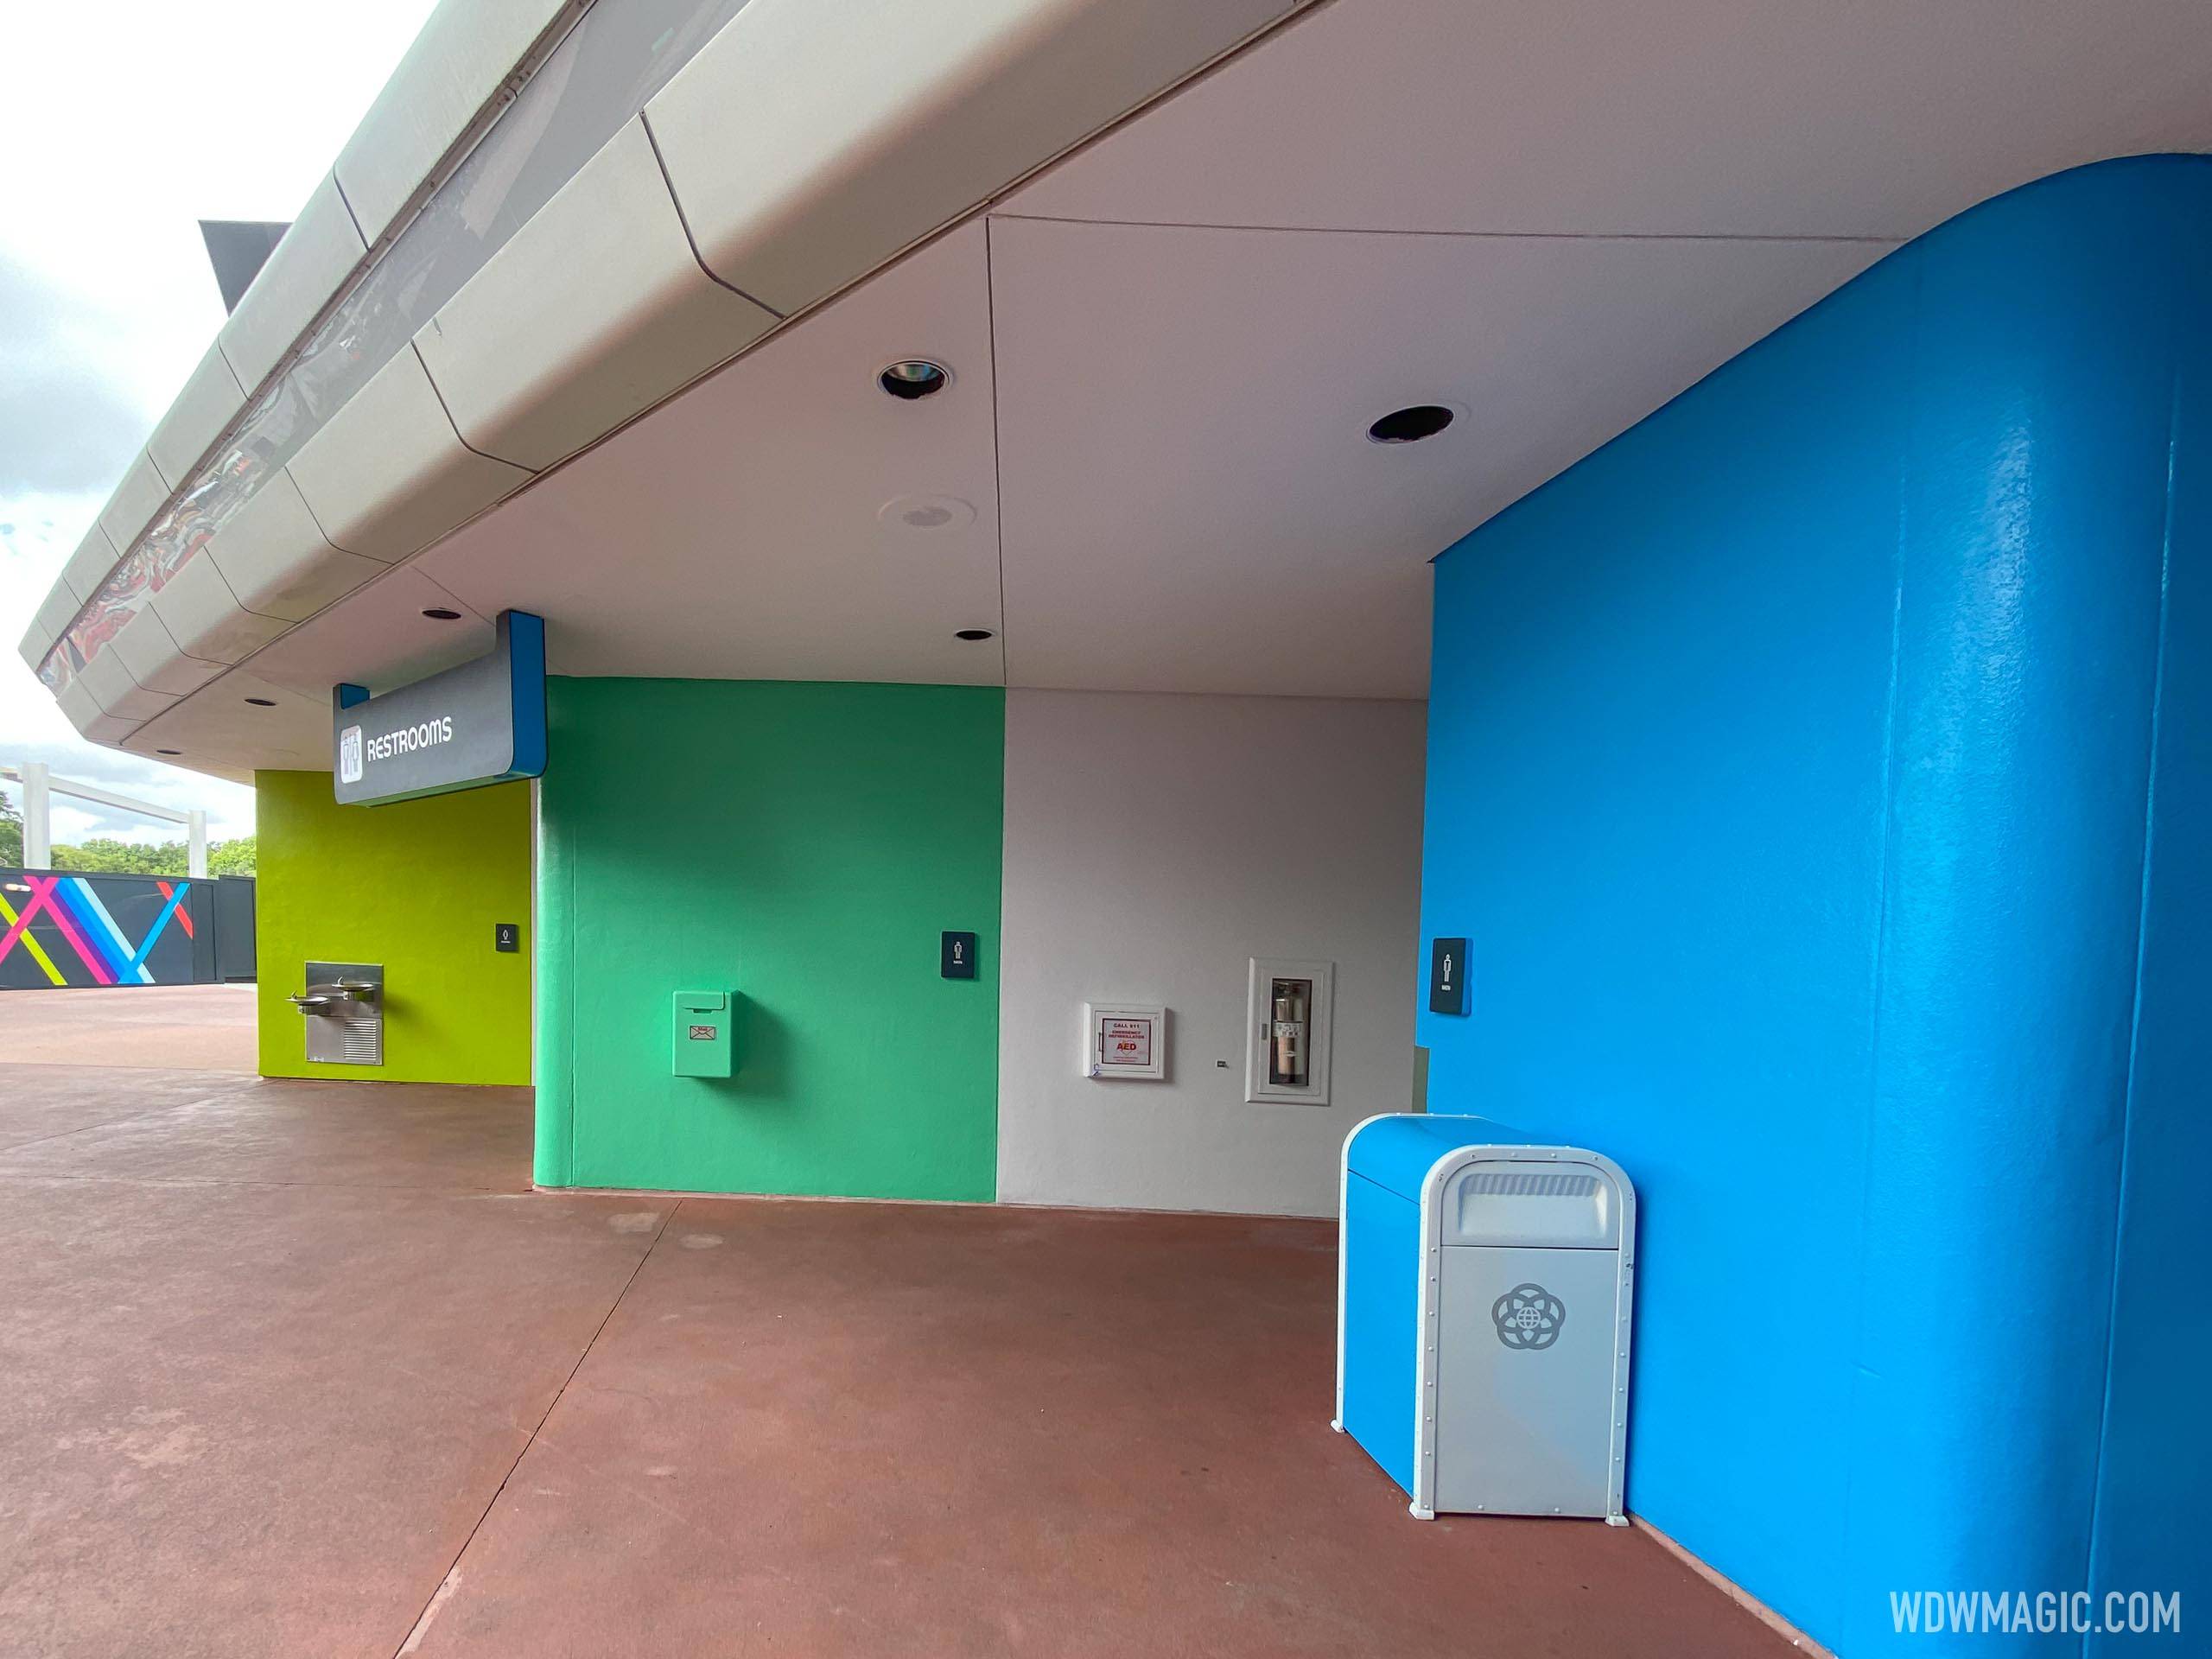 New color scheme around Spaceship Earth bathrooms